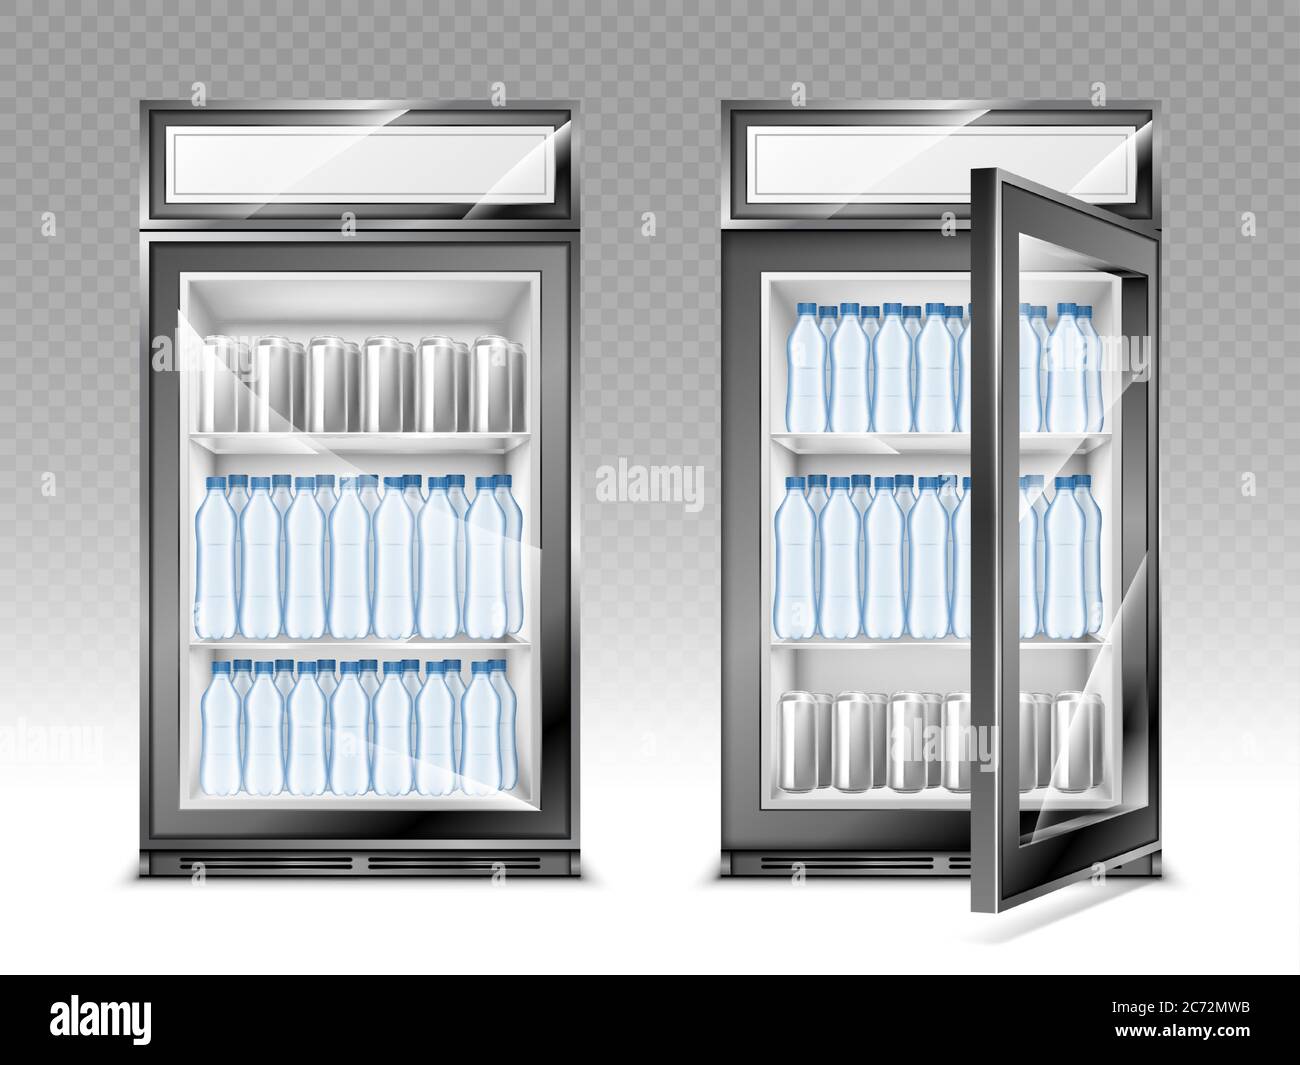 Mini frigo con display digitale